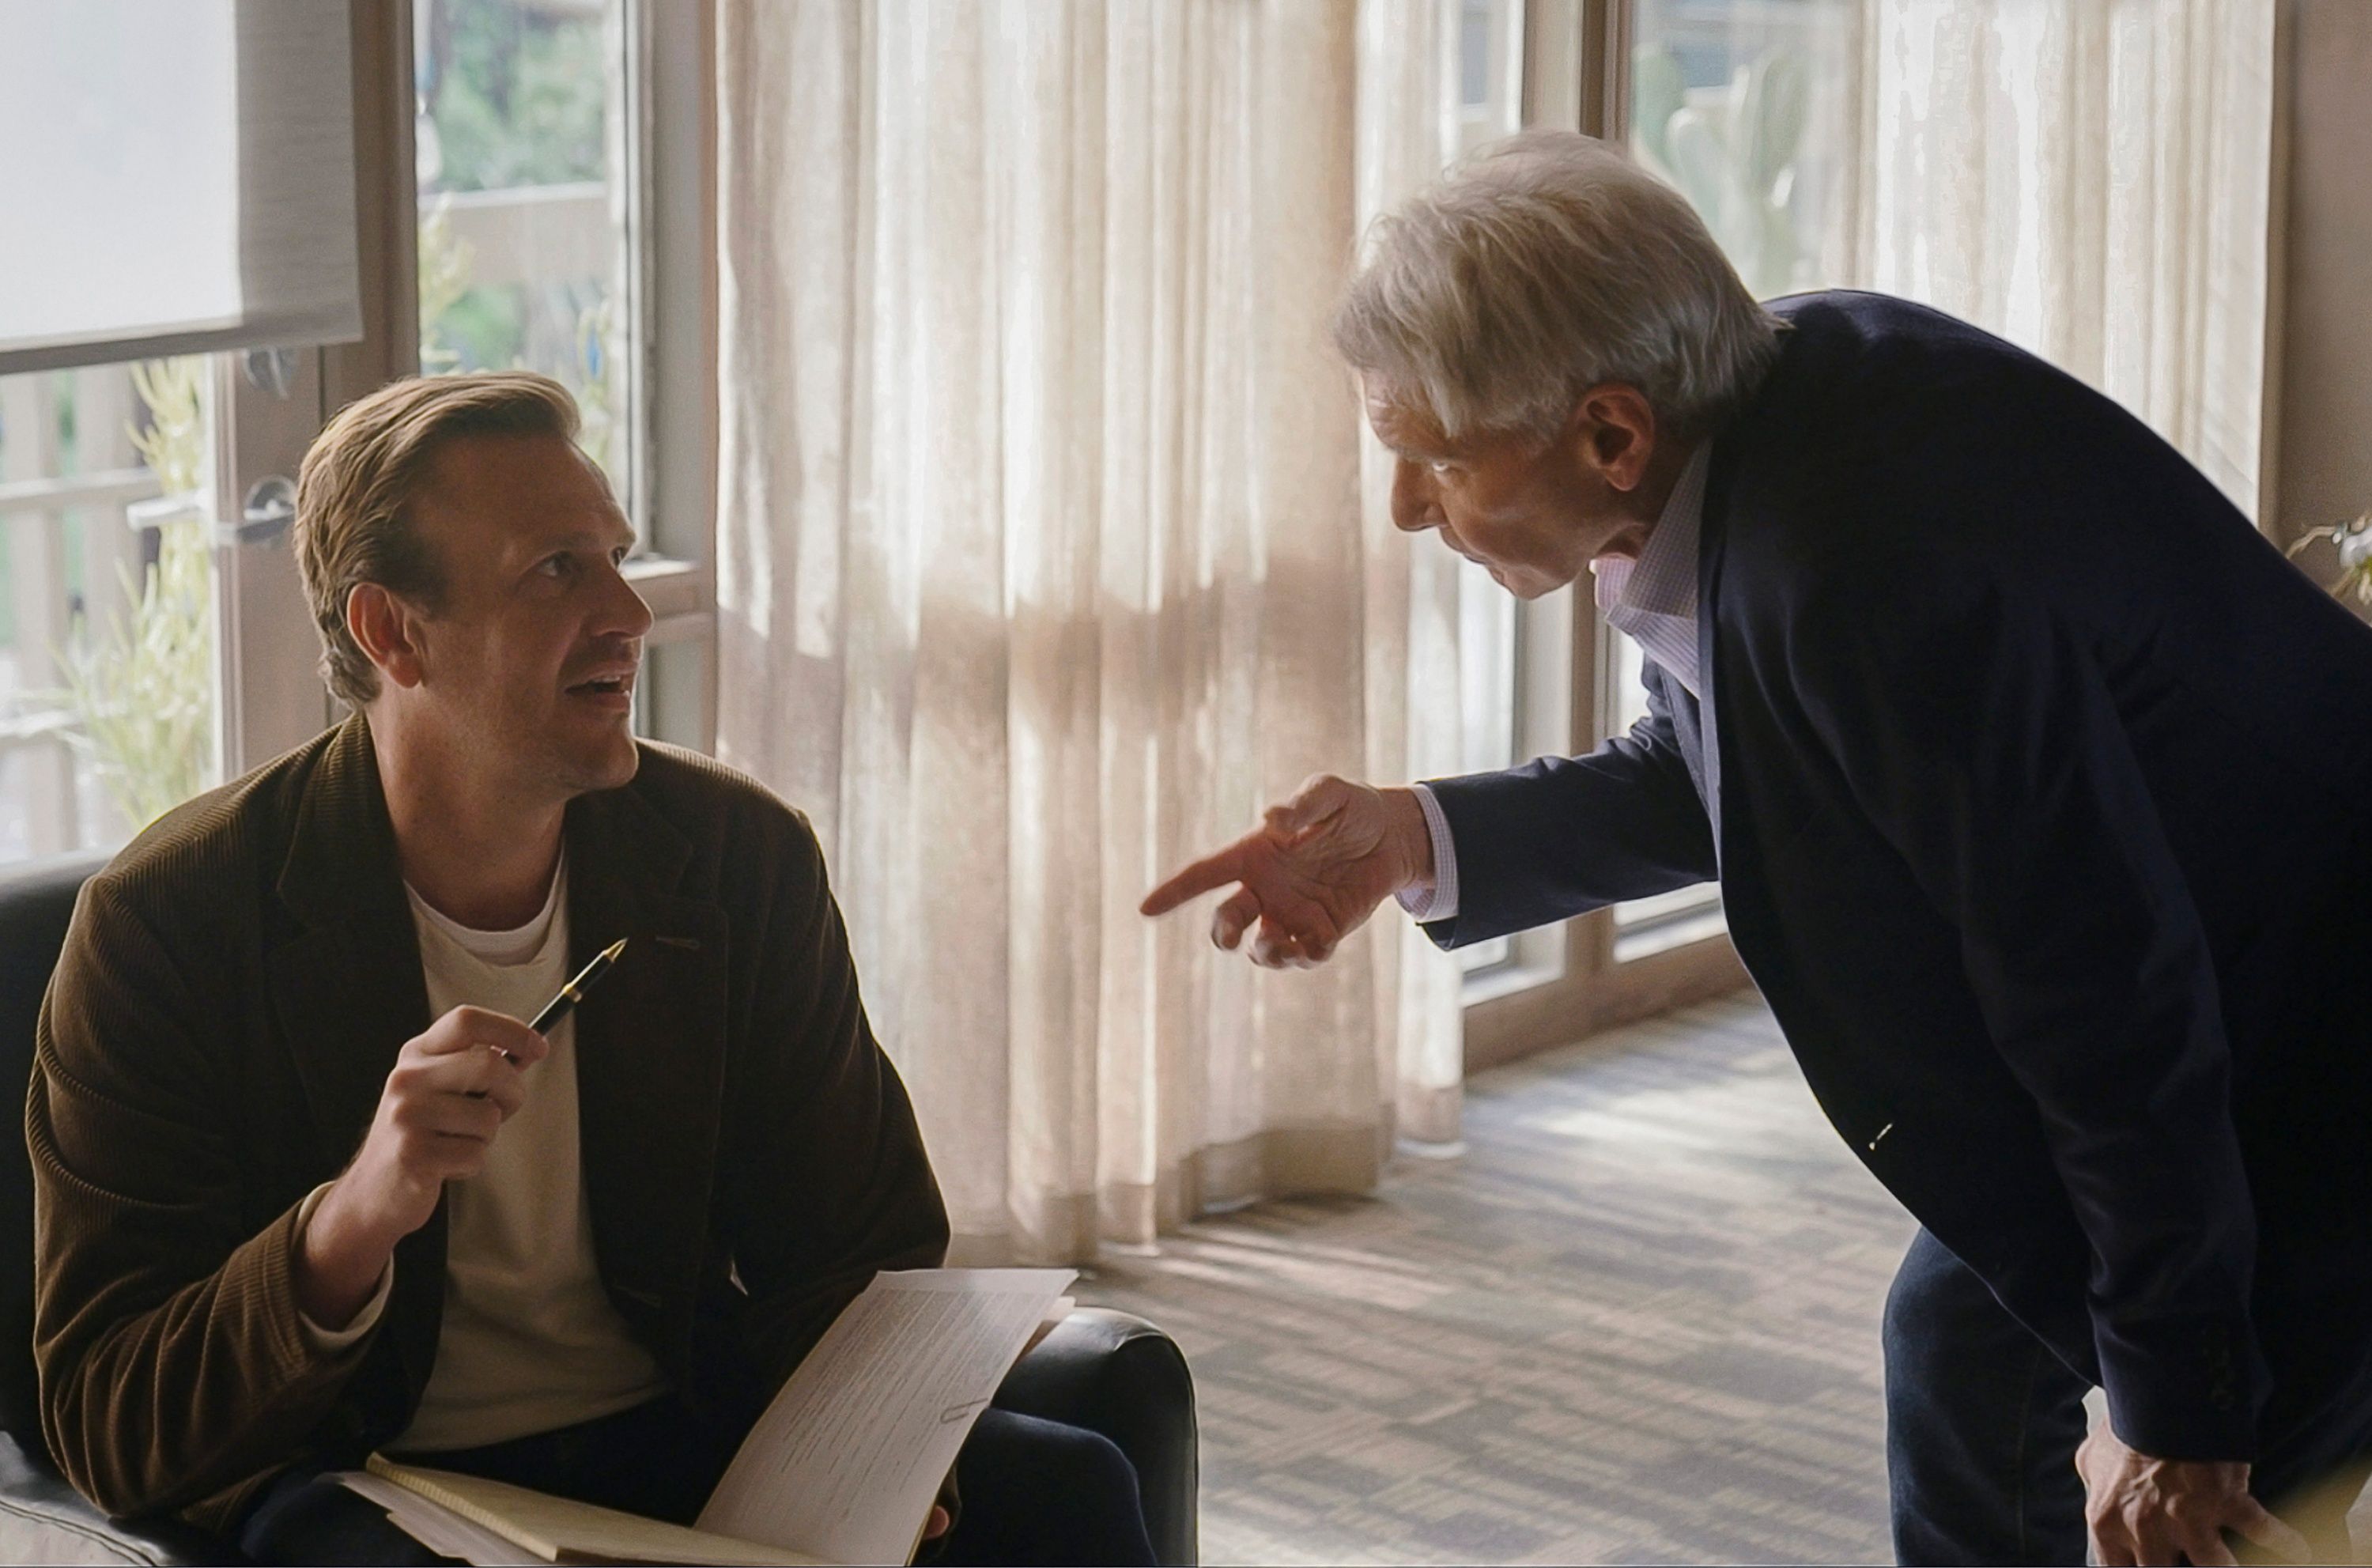 Jason Segel as Jimmy and Harrison Ford as Paul in Season 1 of Shrinking